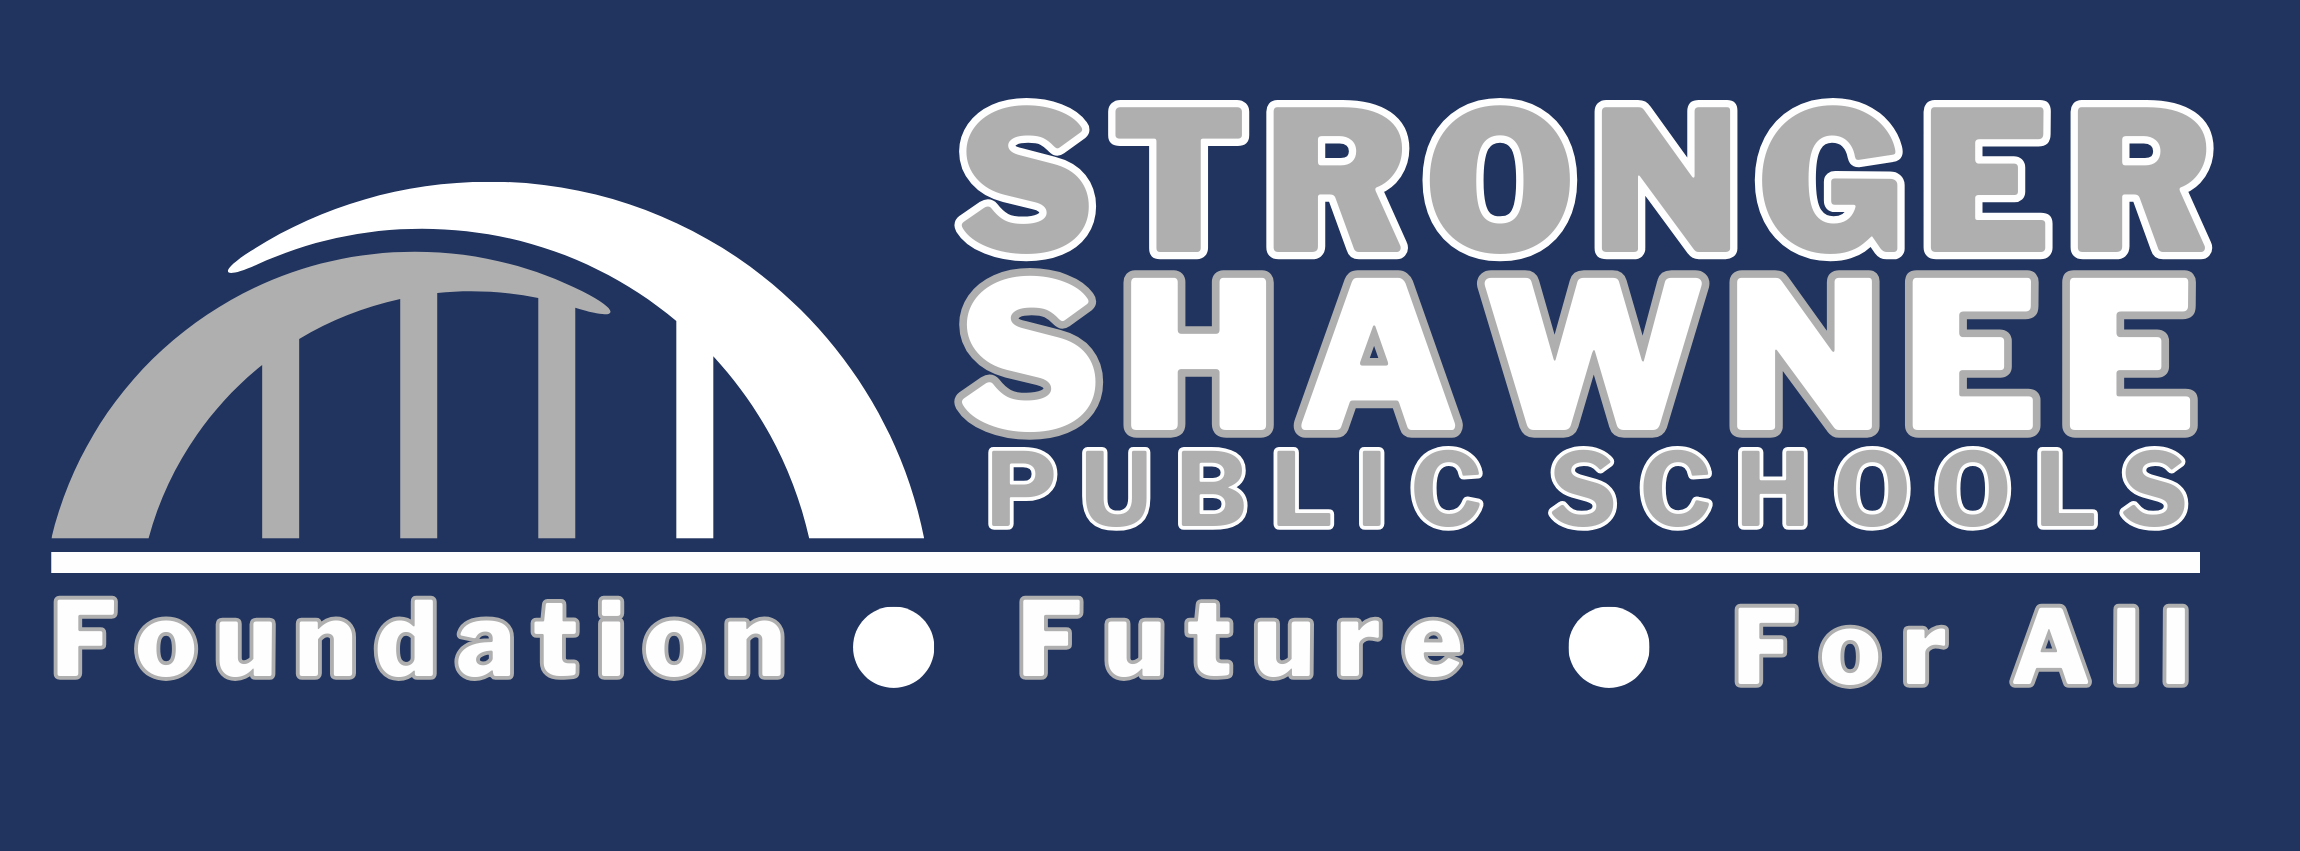 stronger shawnee public schools